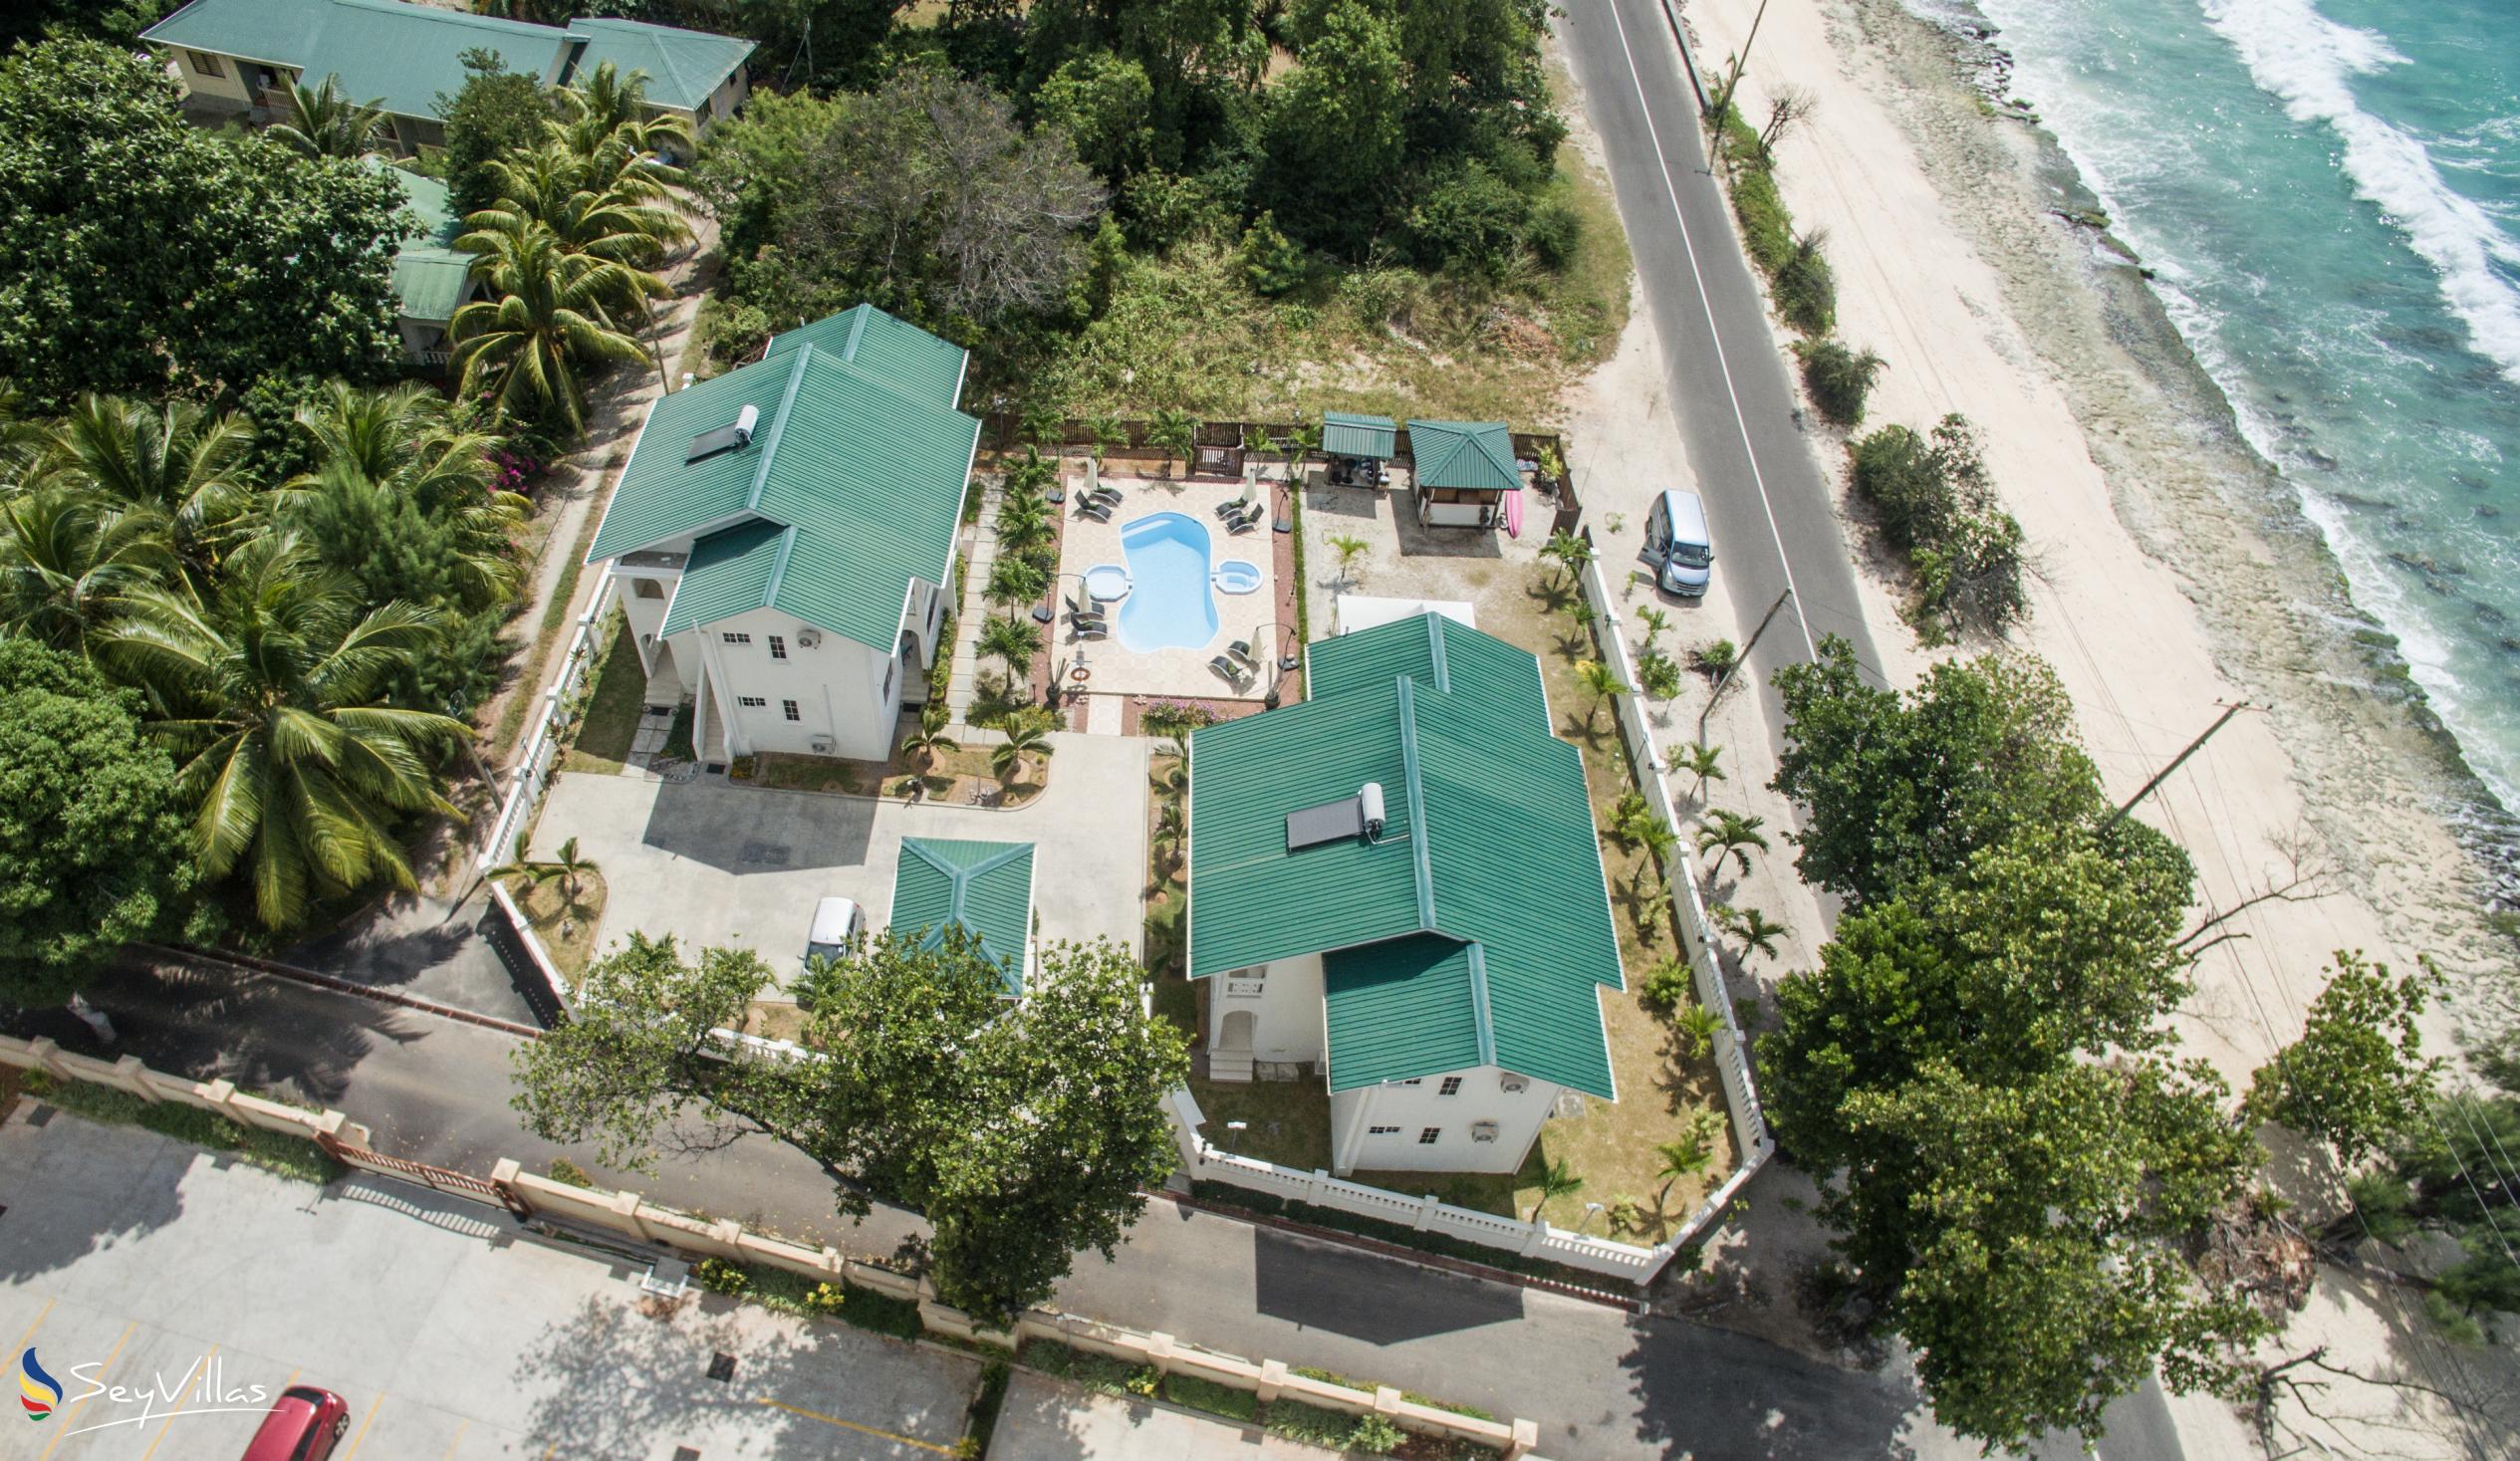 Foto 13: Villa Koket - Aussenbereich - Mahé (Seychellen)